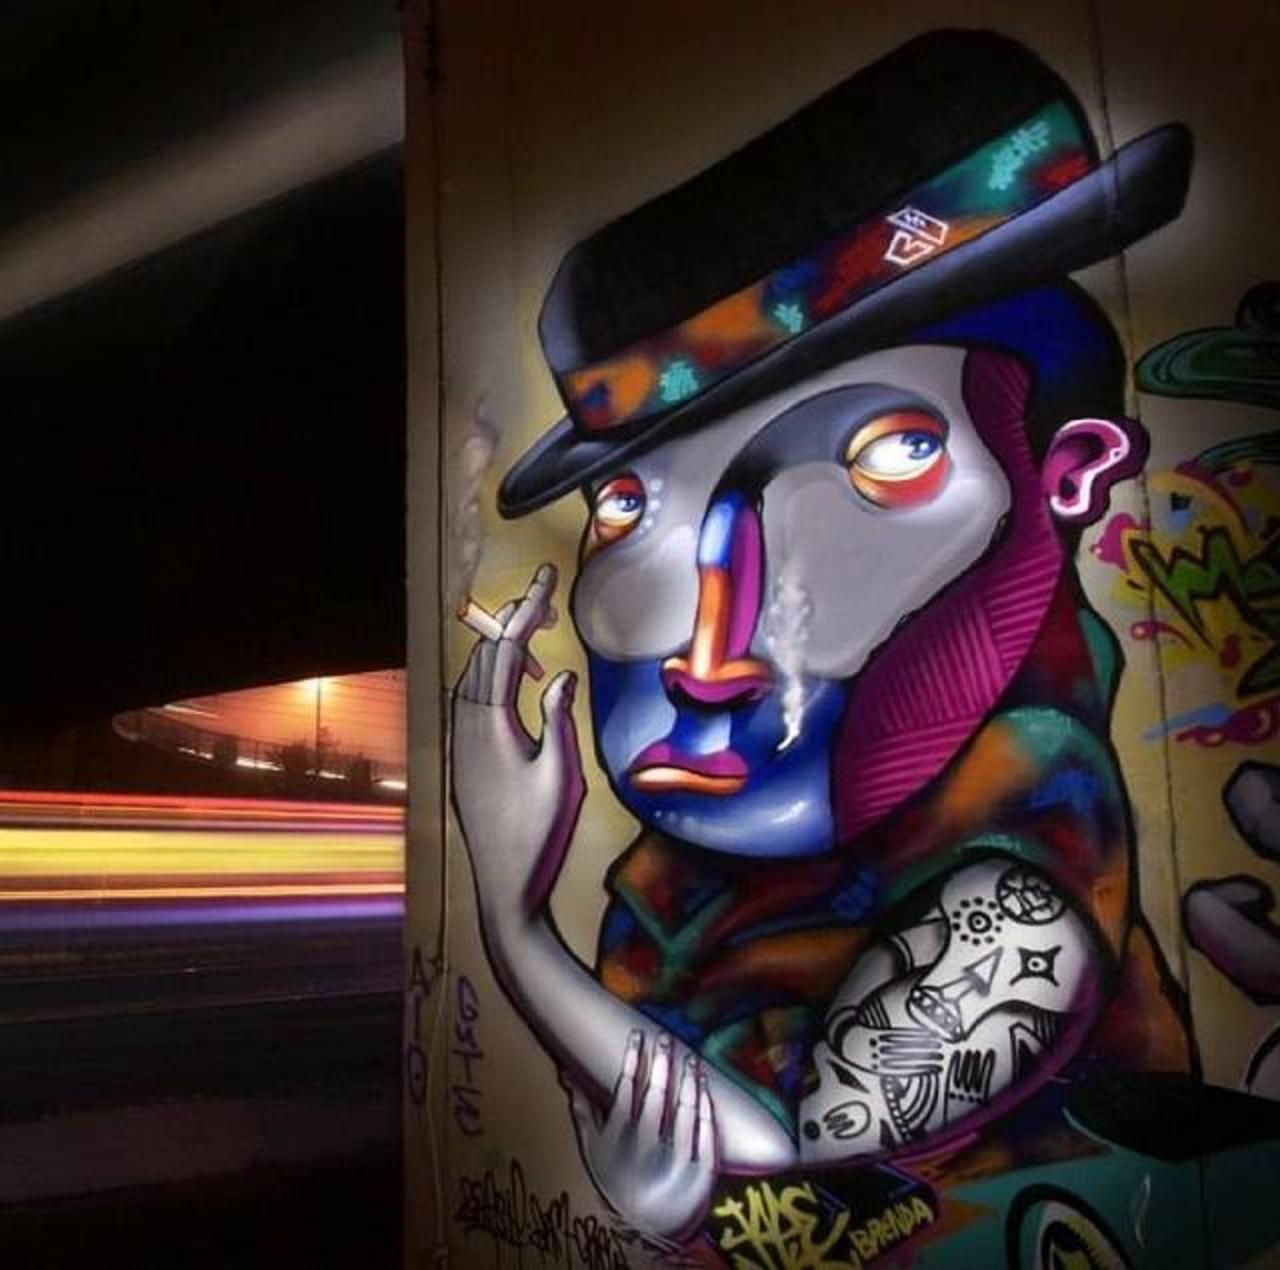 “@GoogleStreetArt: Abstract Street Art by Jade Rivera #art #mural #graffiti #streetart http://t.co/HV5doBT441”...this one is fun!!